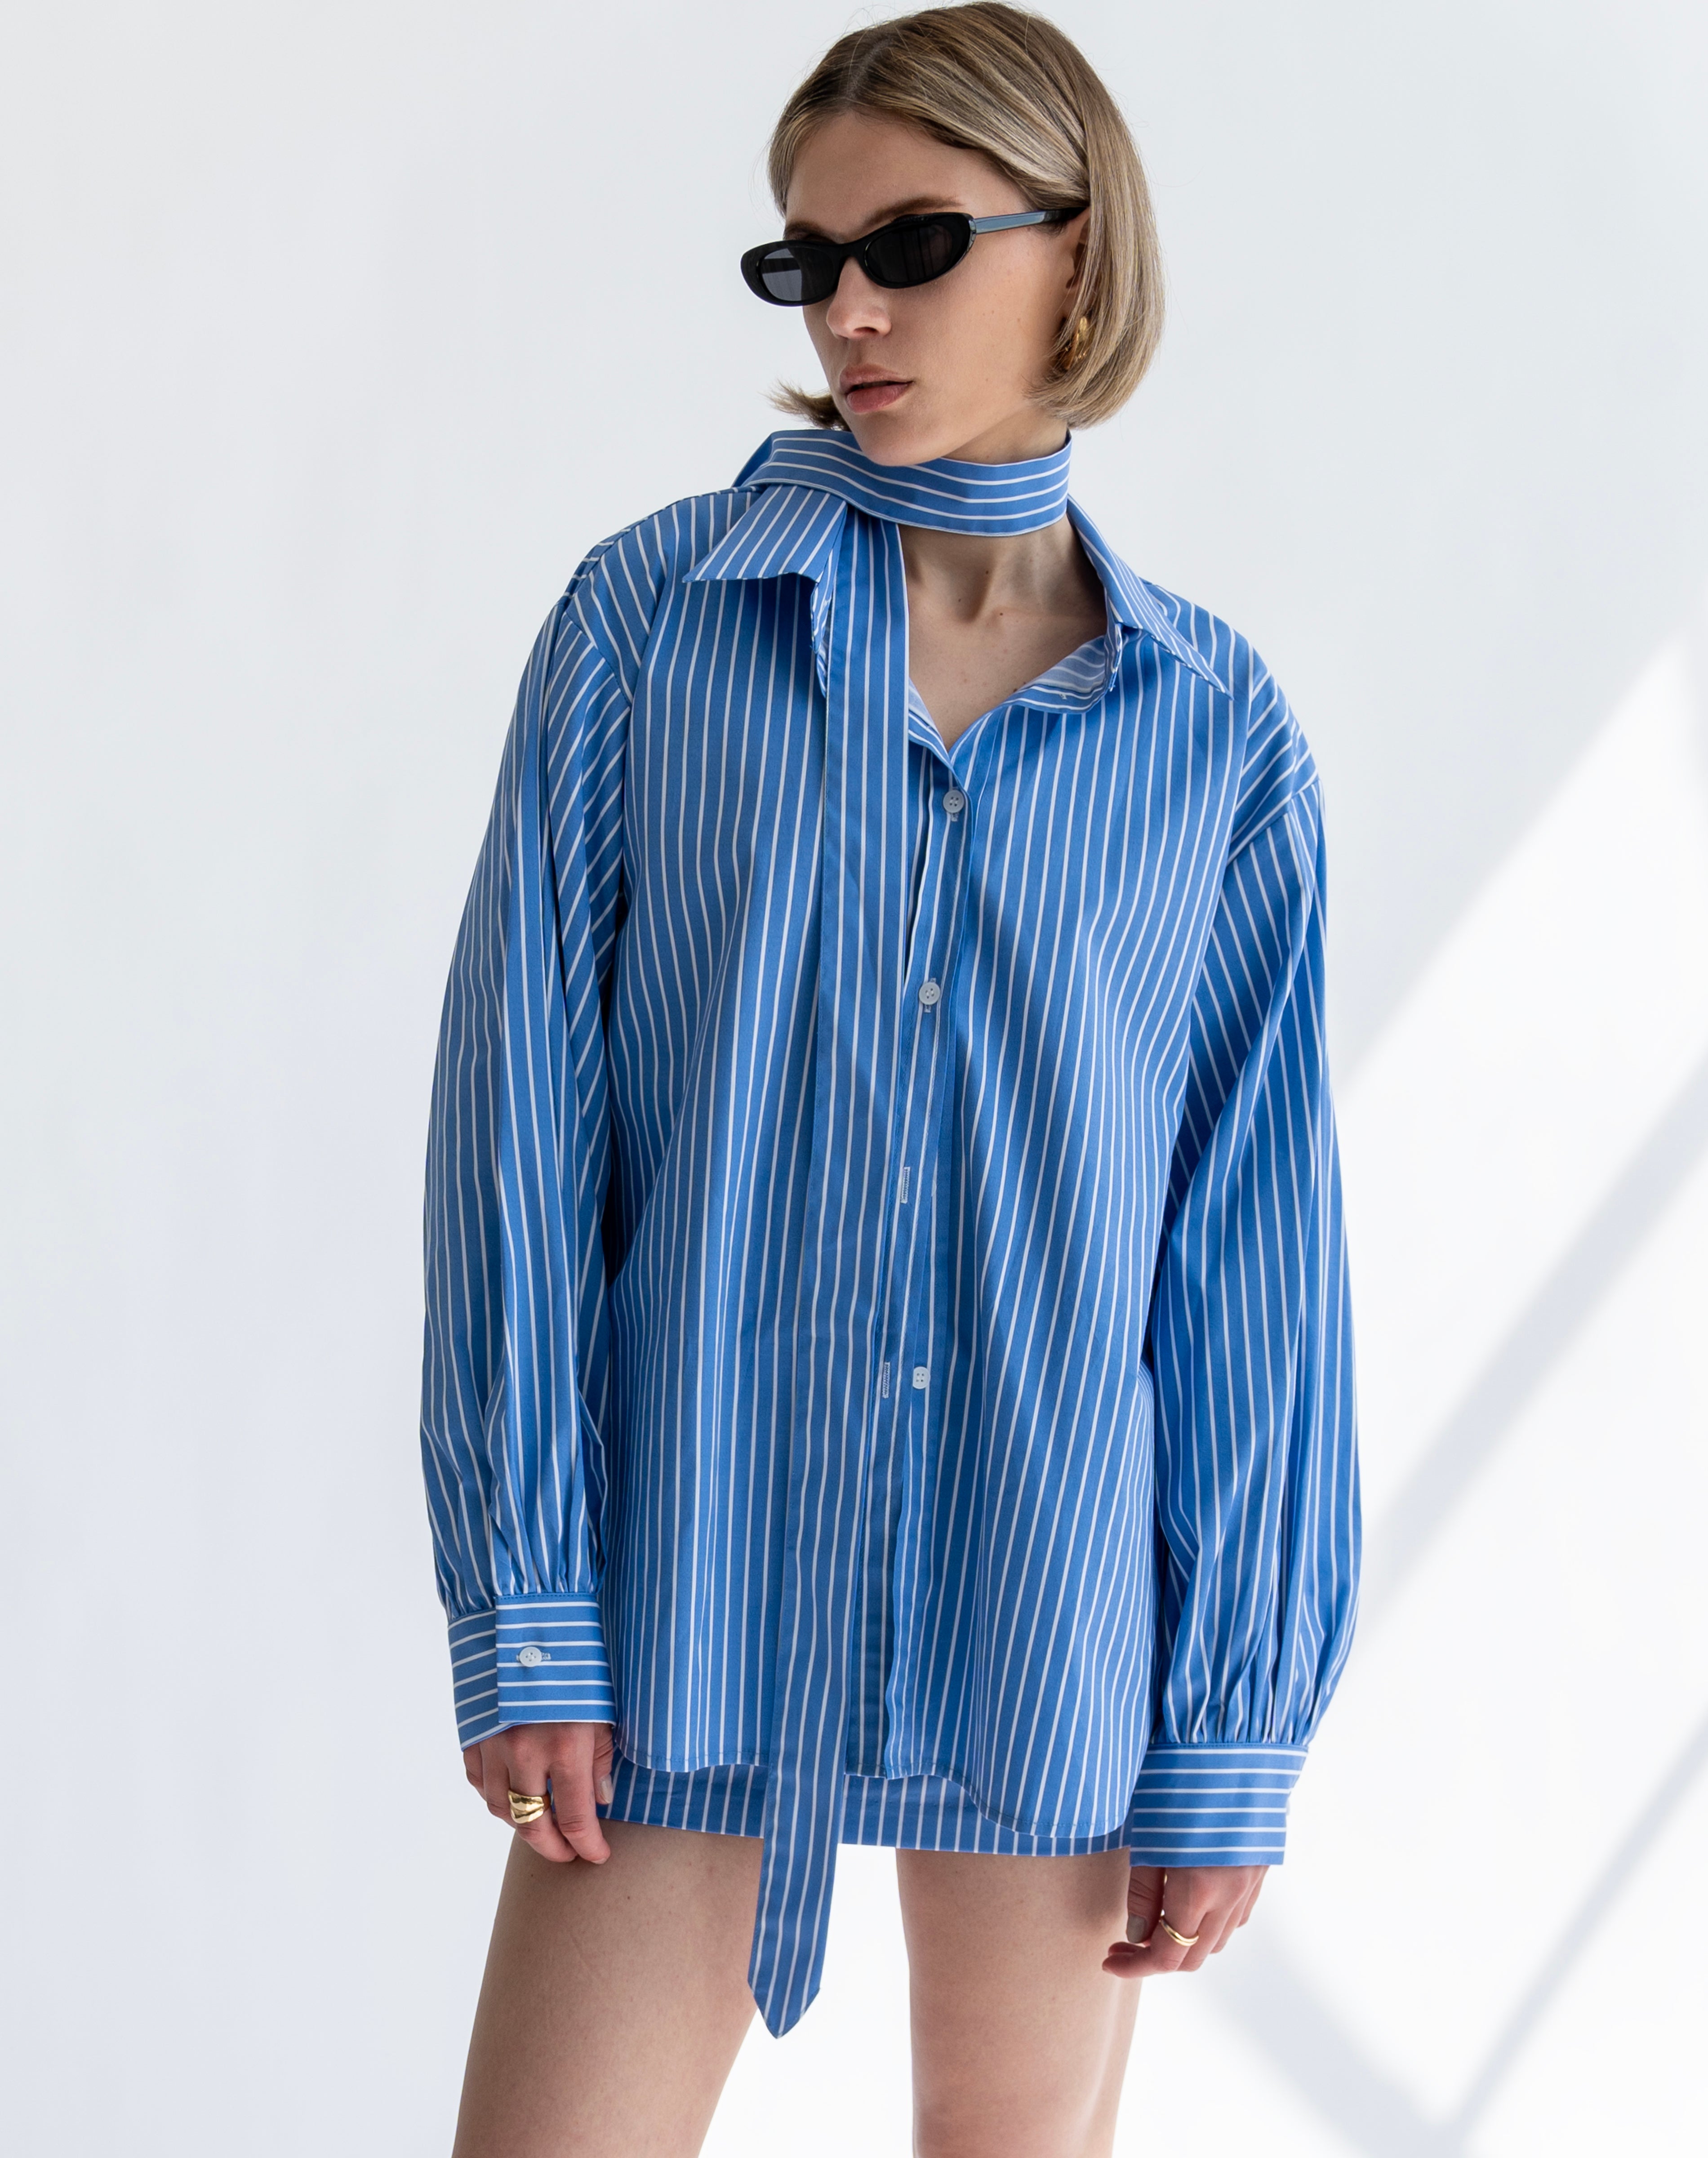 Lyla Striped Shirt With Scarf, Blue